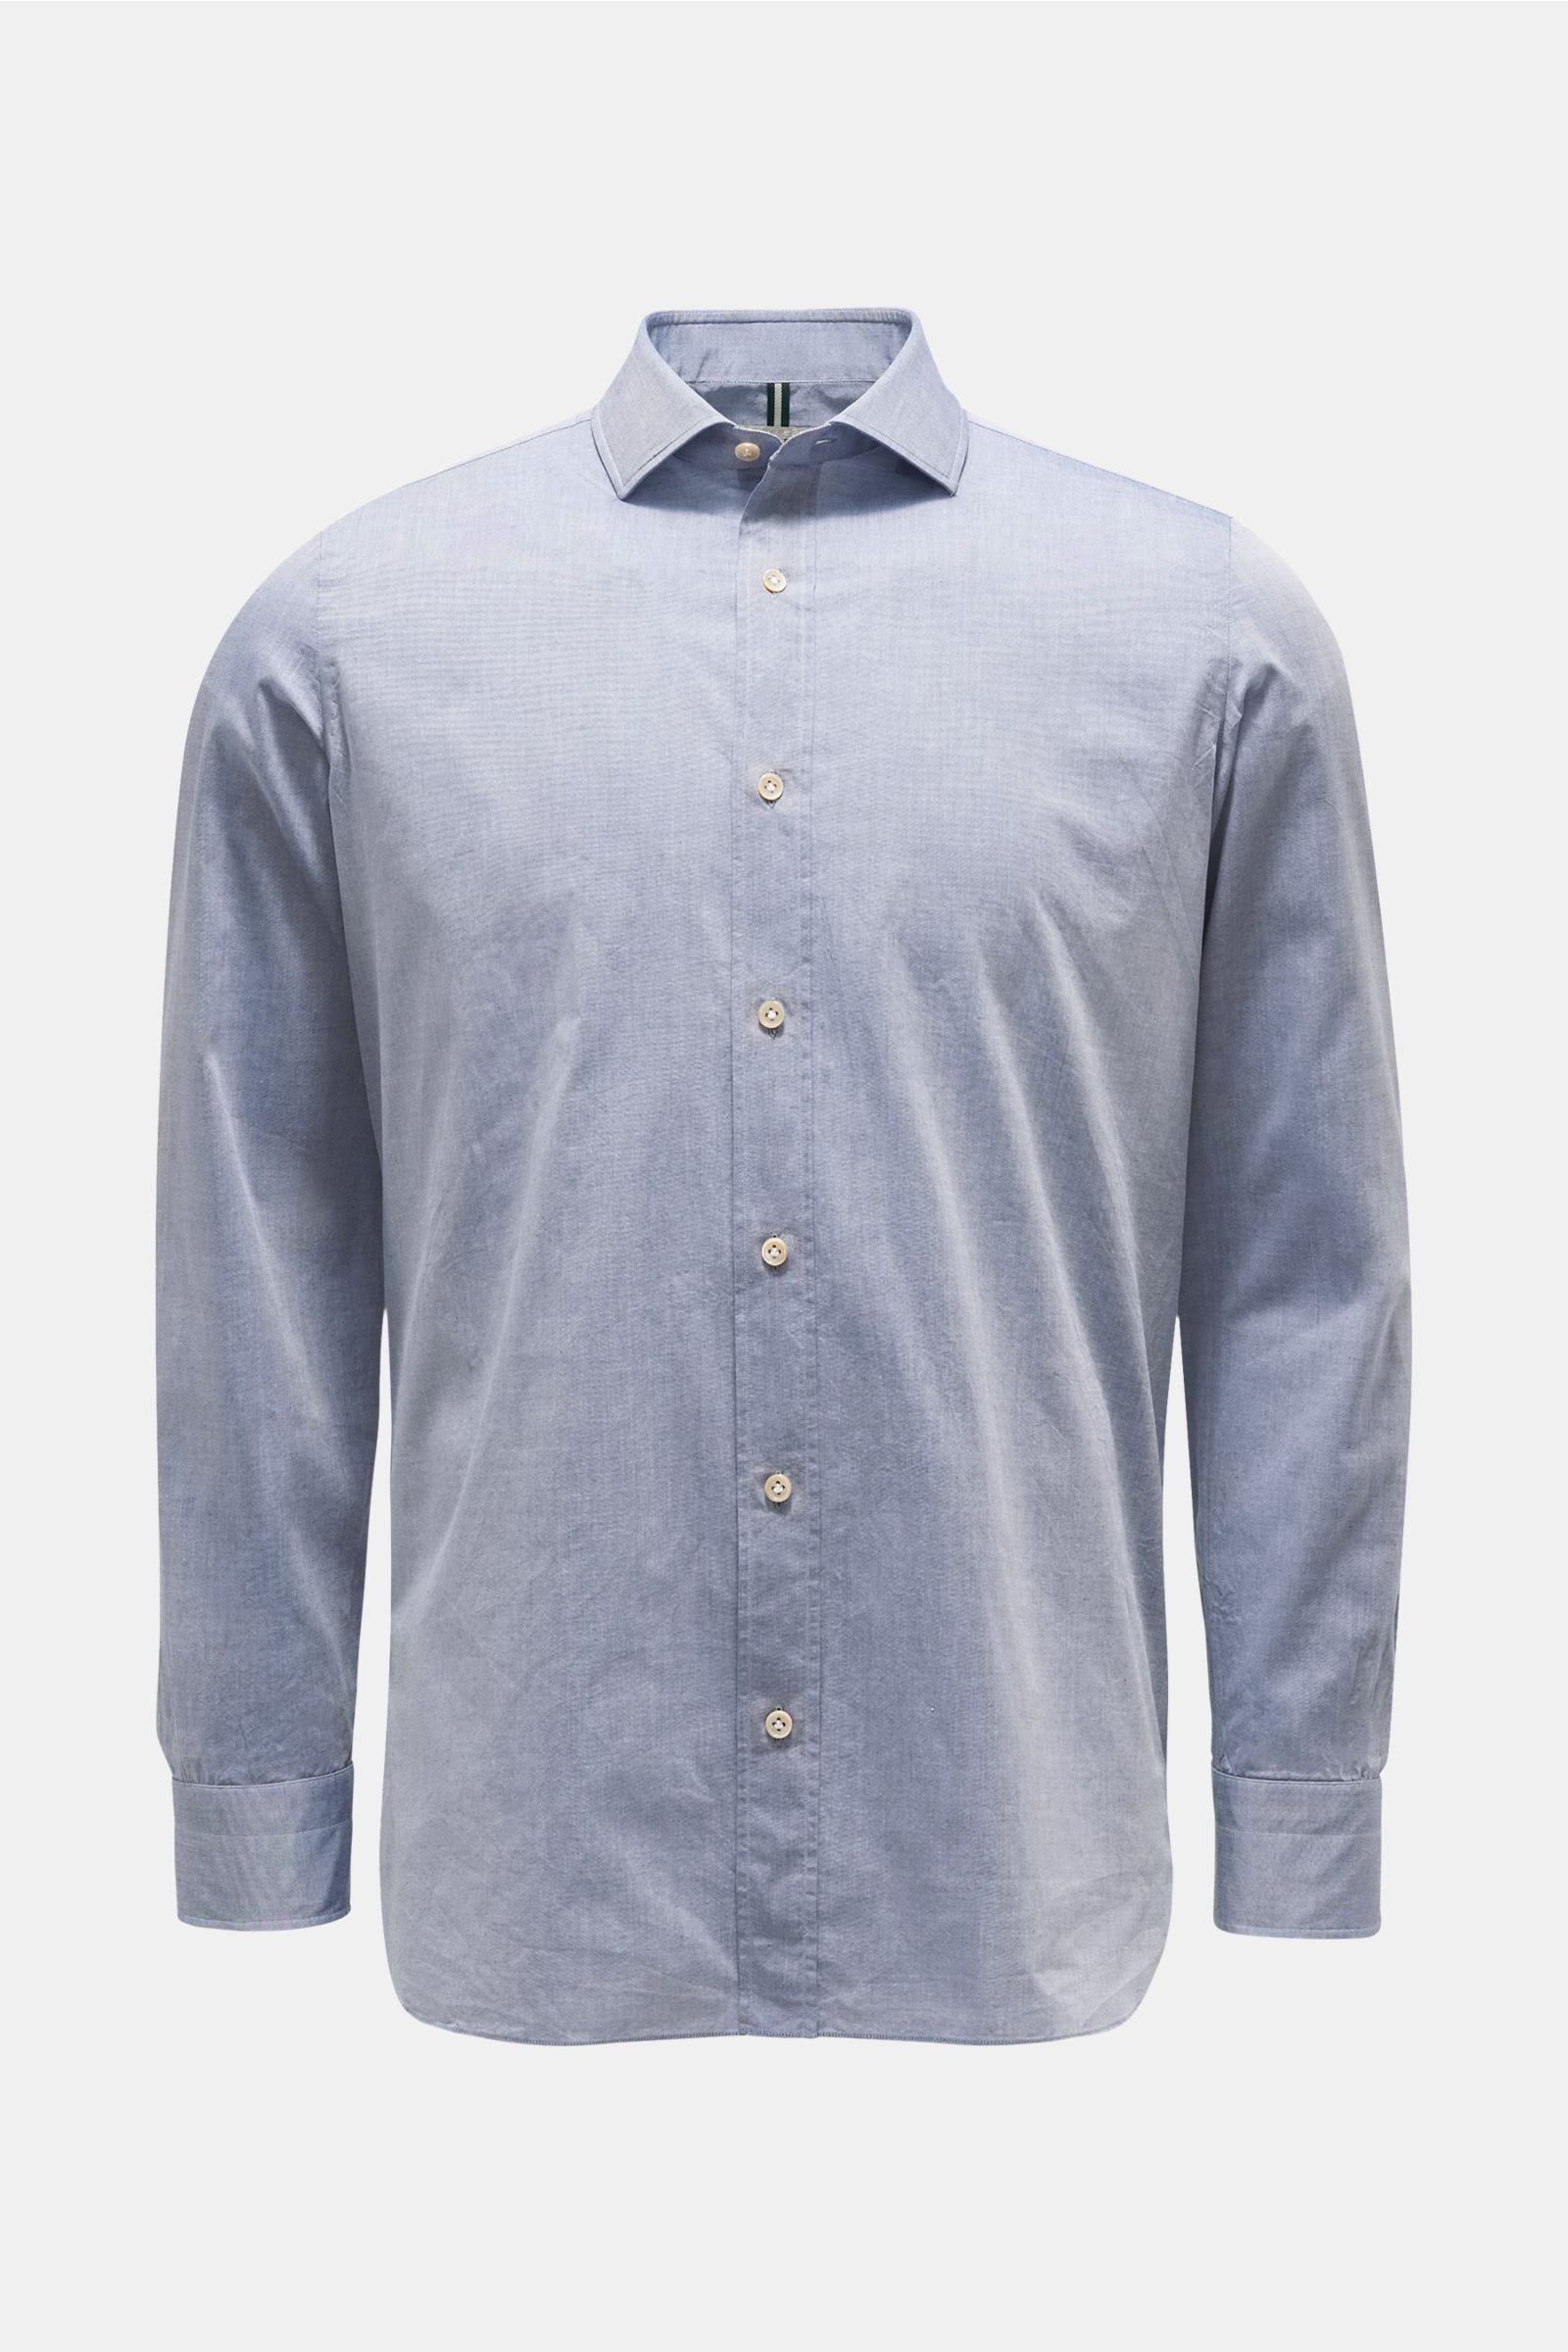 Chambray shirt slim collar smoky blue